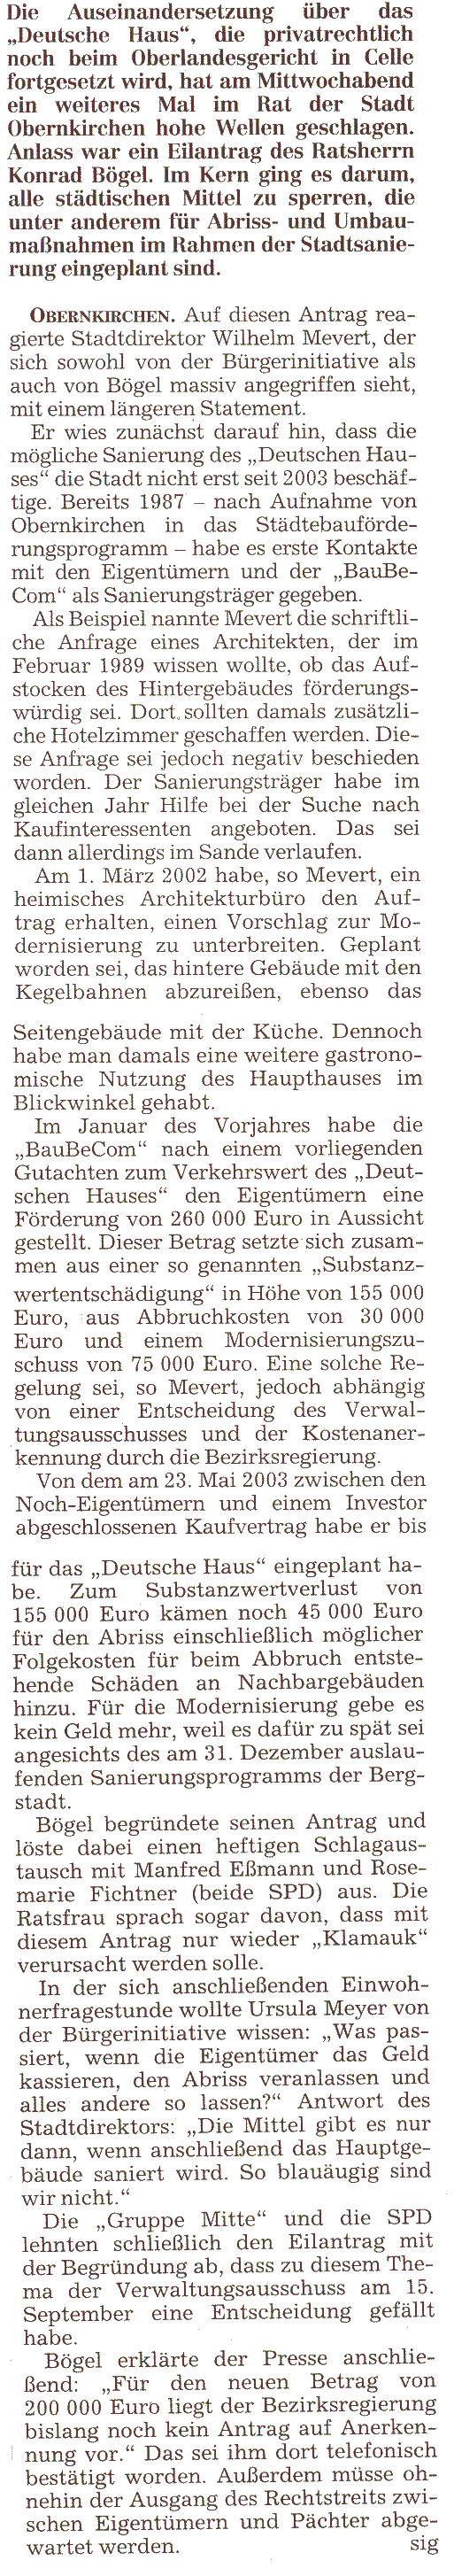  Schaumburger Nachrichten, 24.09.04